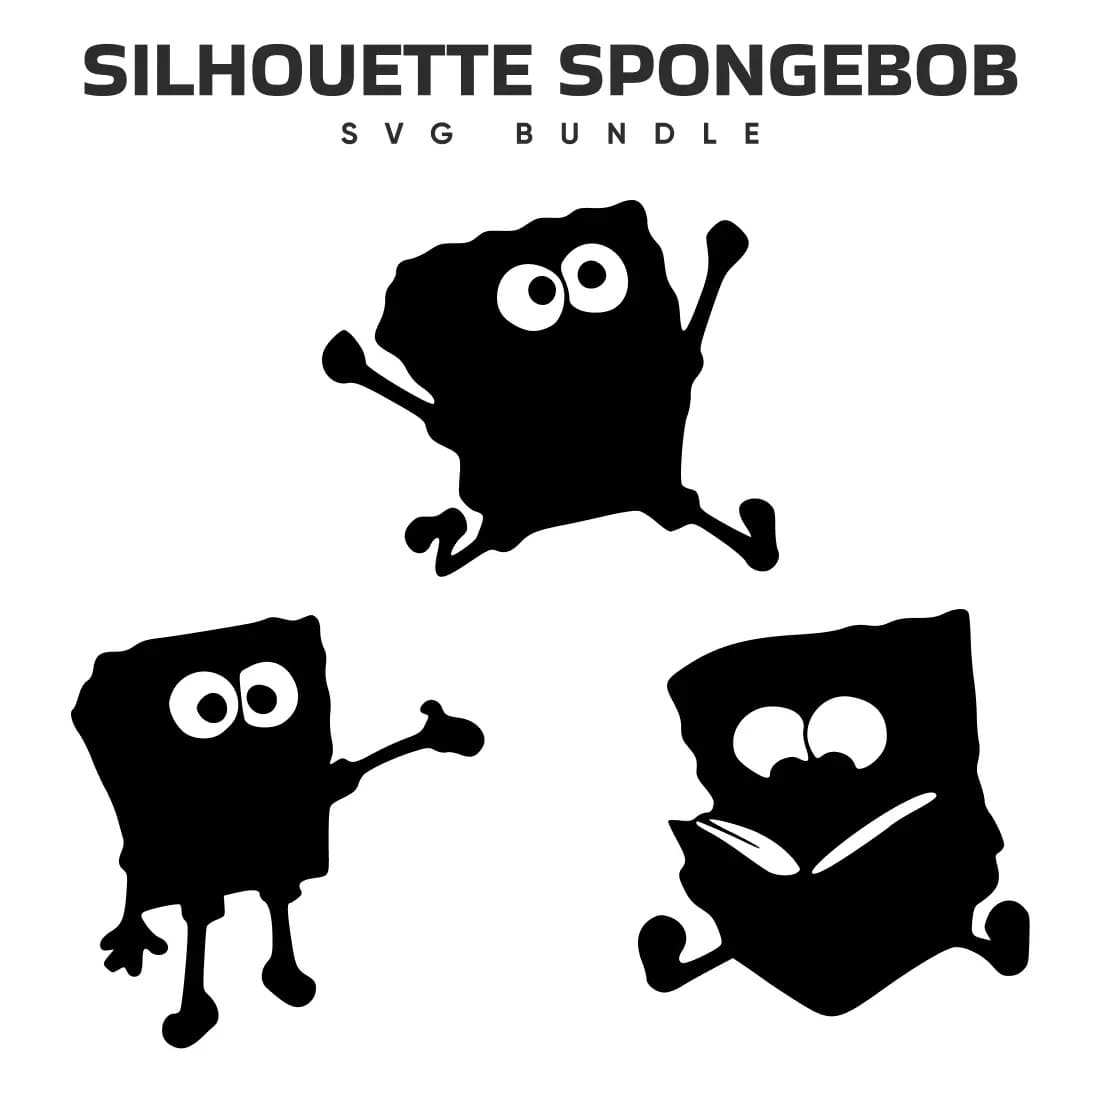 Silhouette Spongebob SVG Bundle Preview.